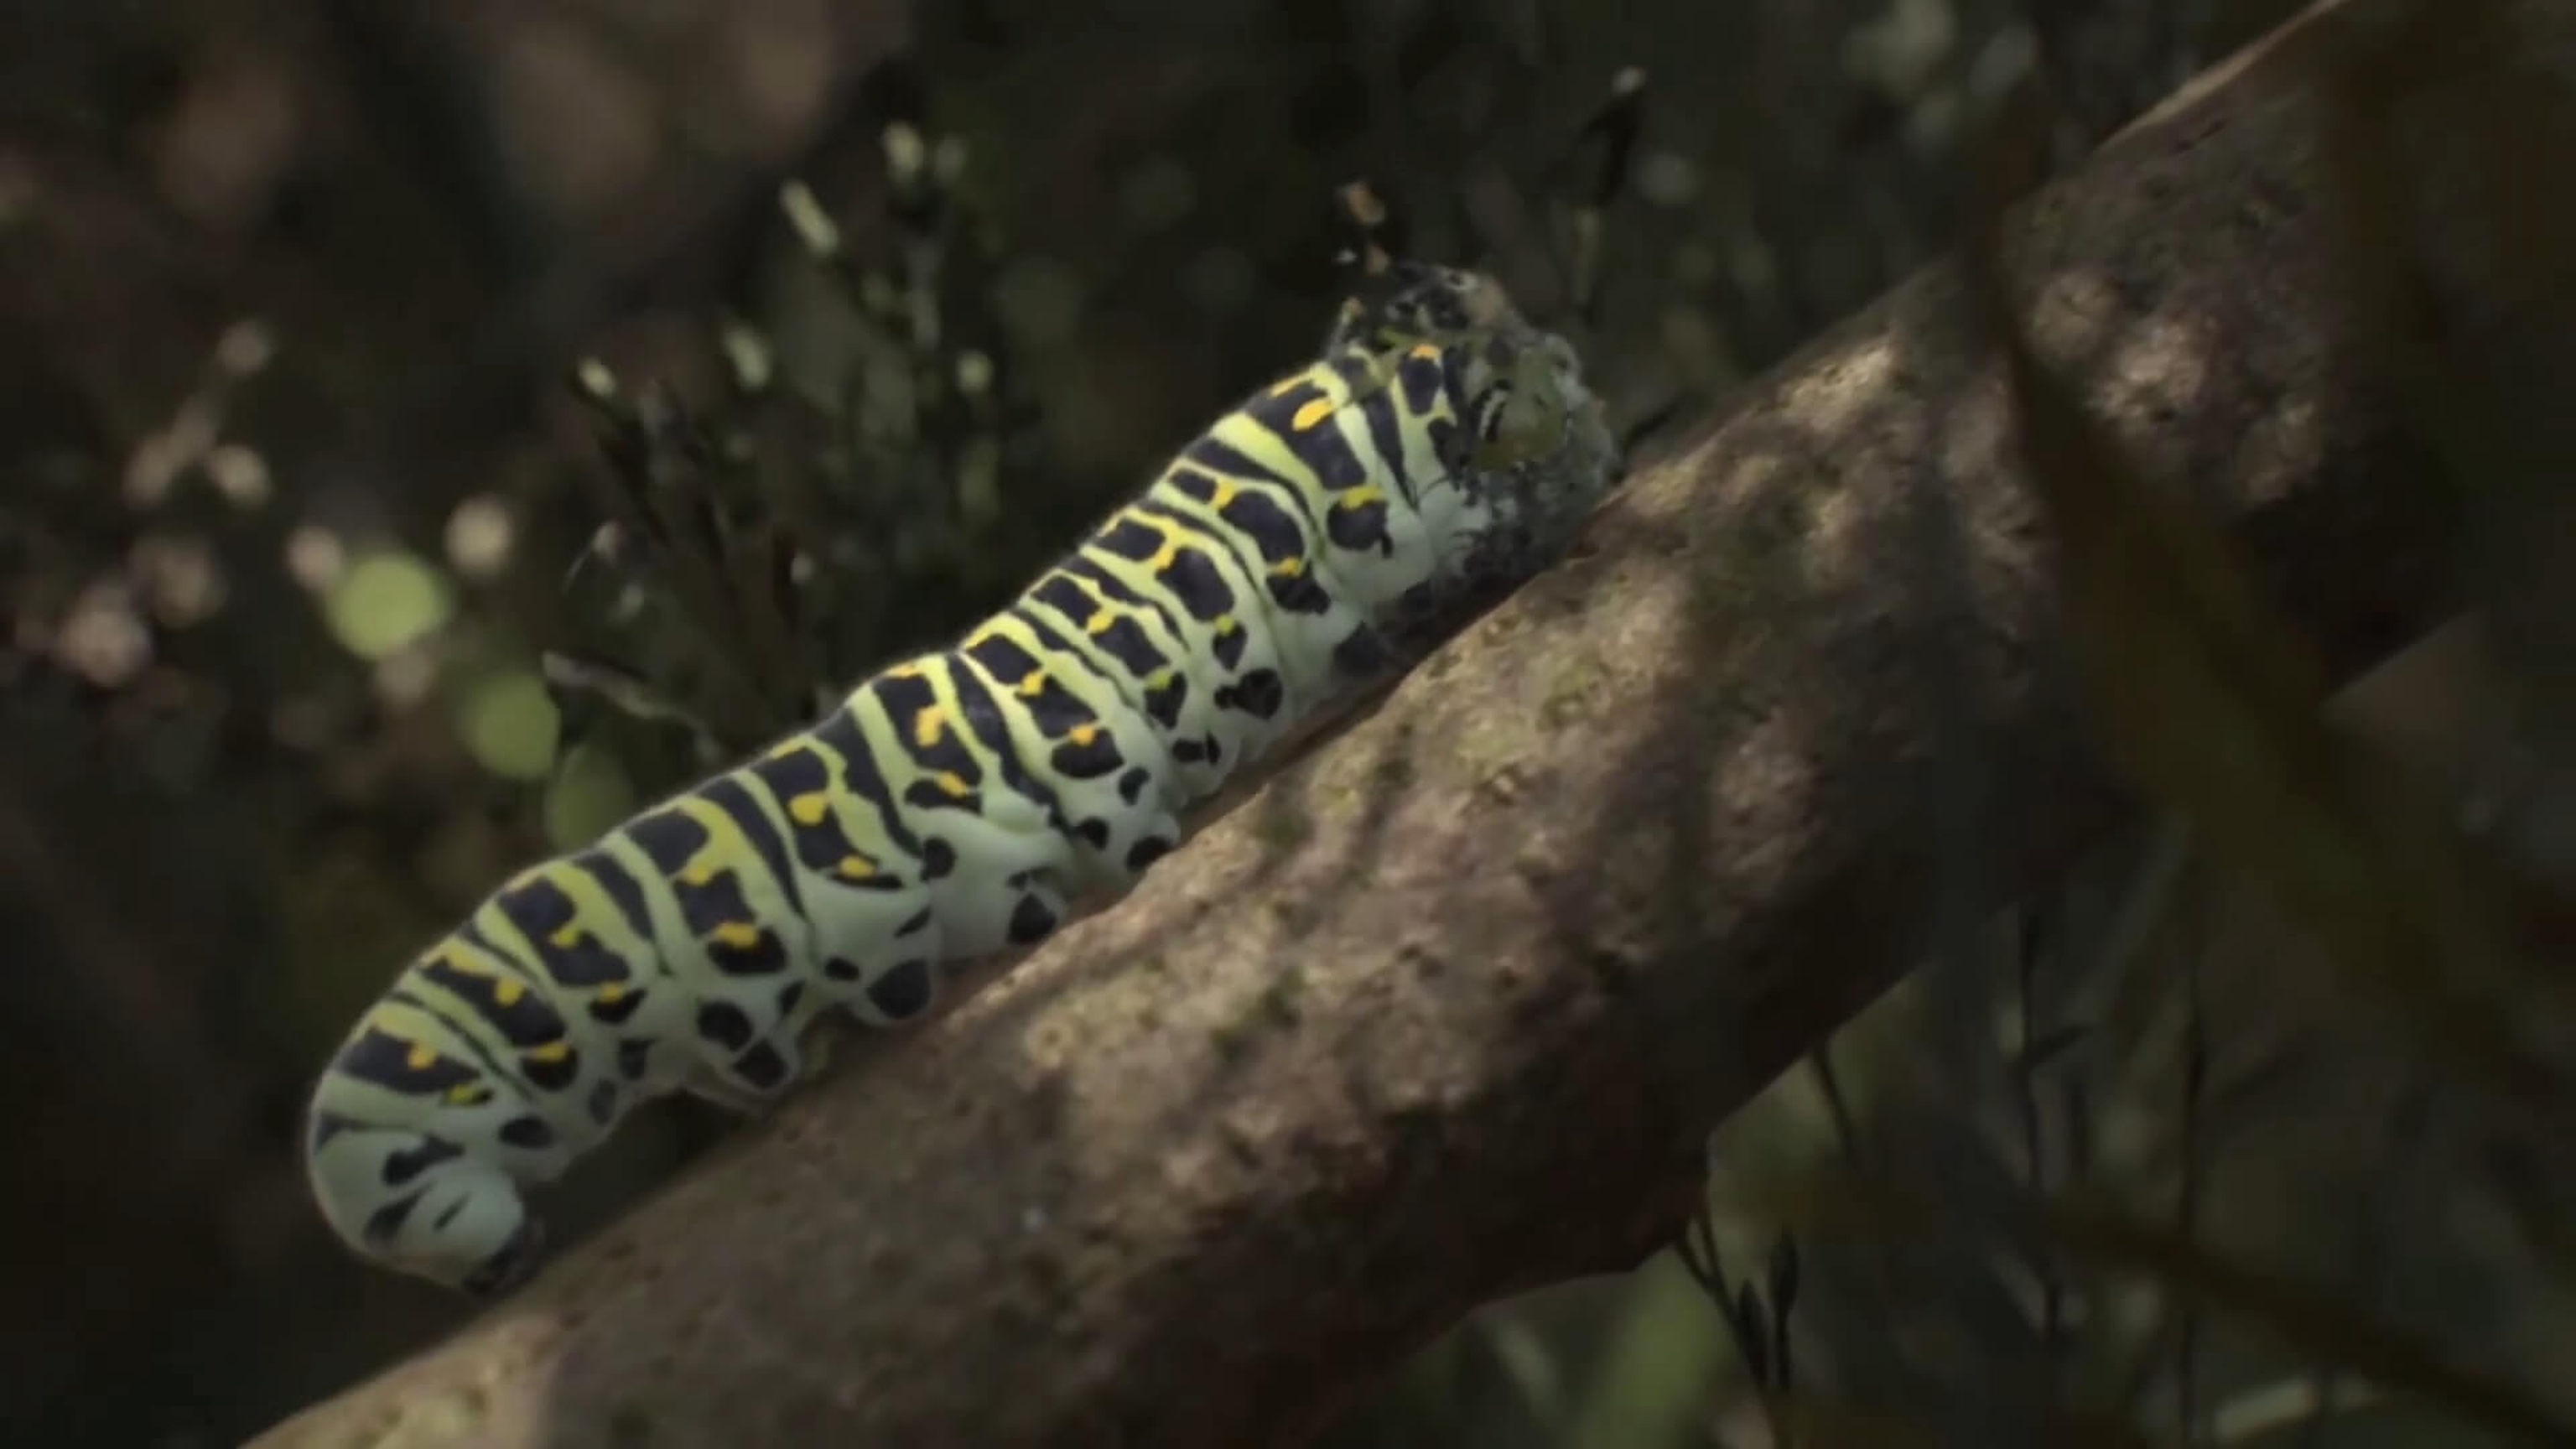 A realistic stripy caterpillar climbs a tree branch